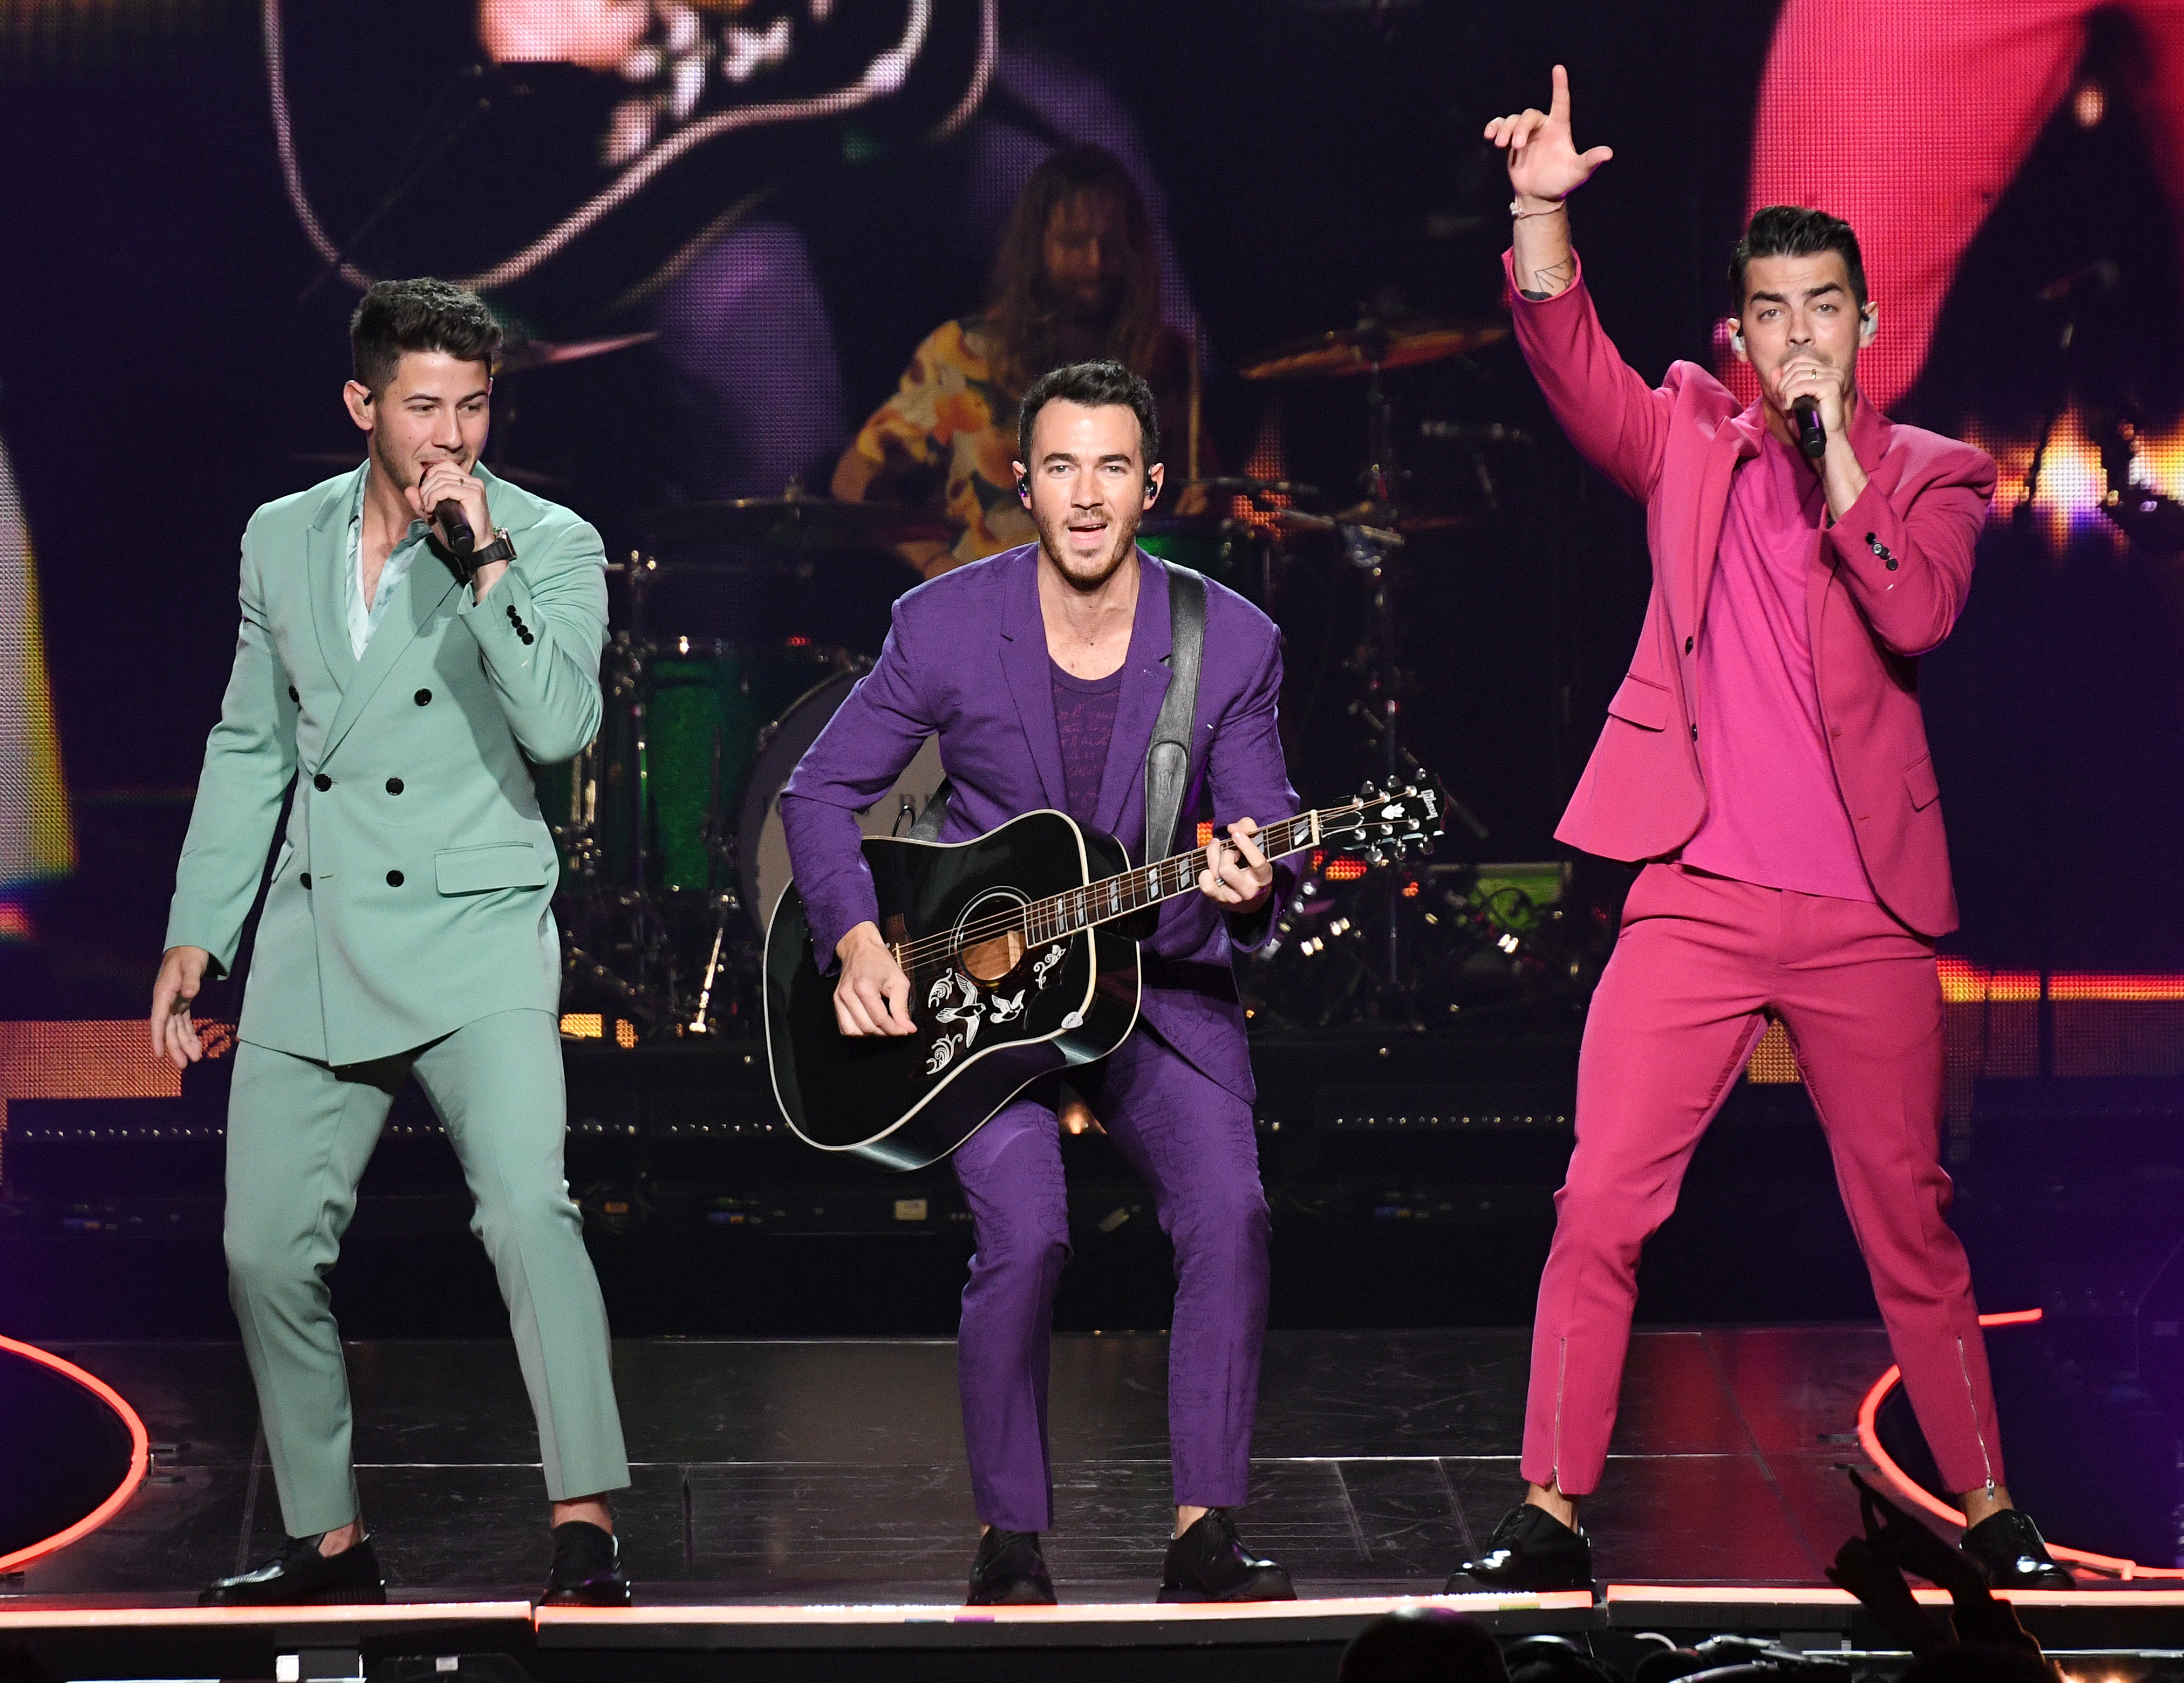 Jonas Brothers In Concert - New York, NY